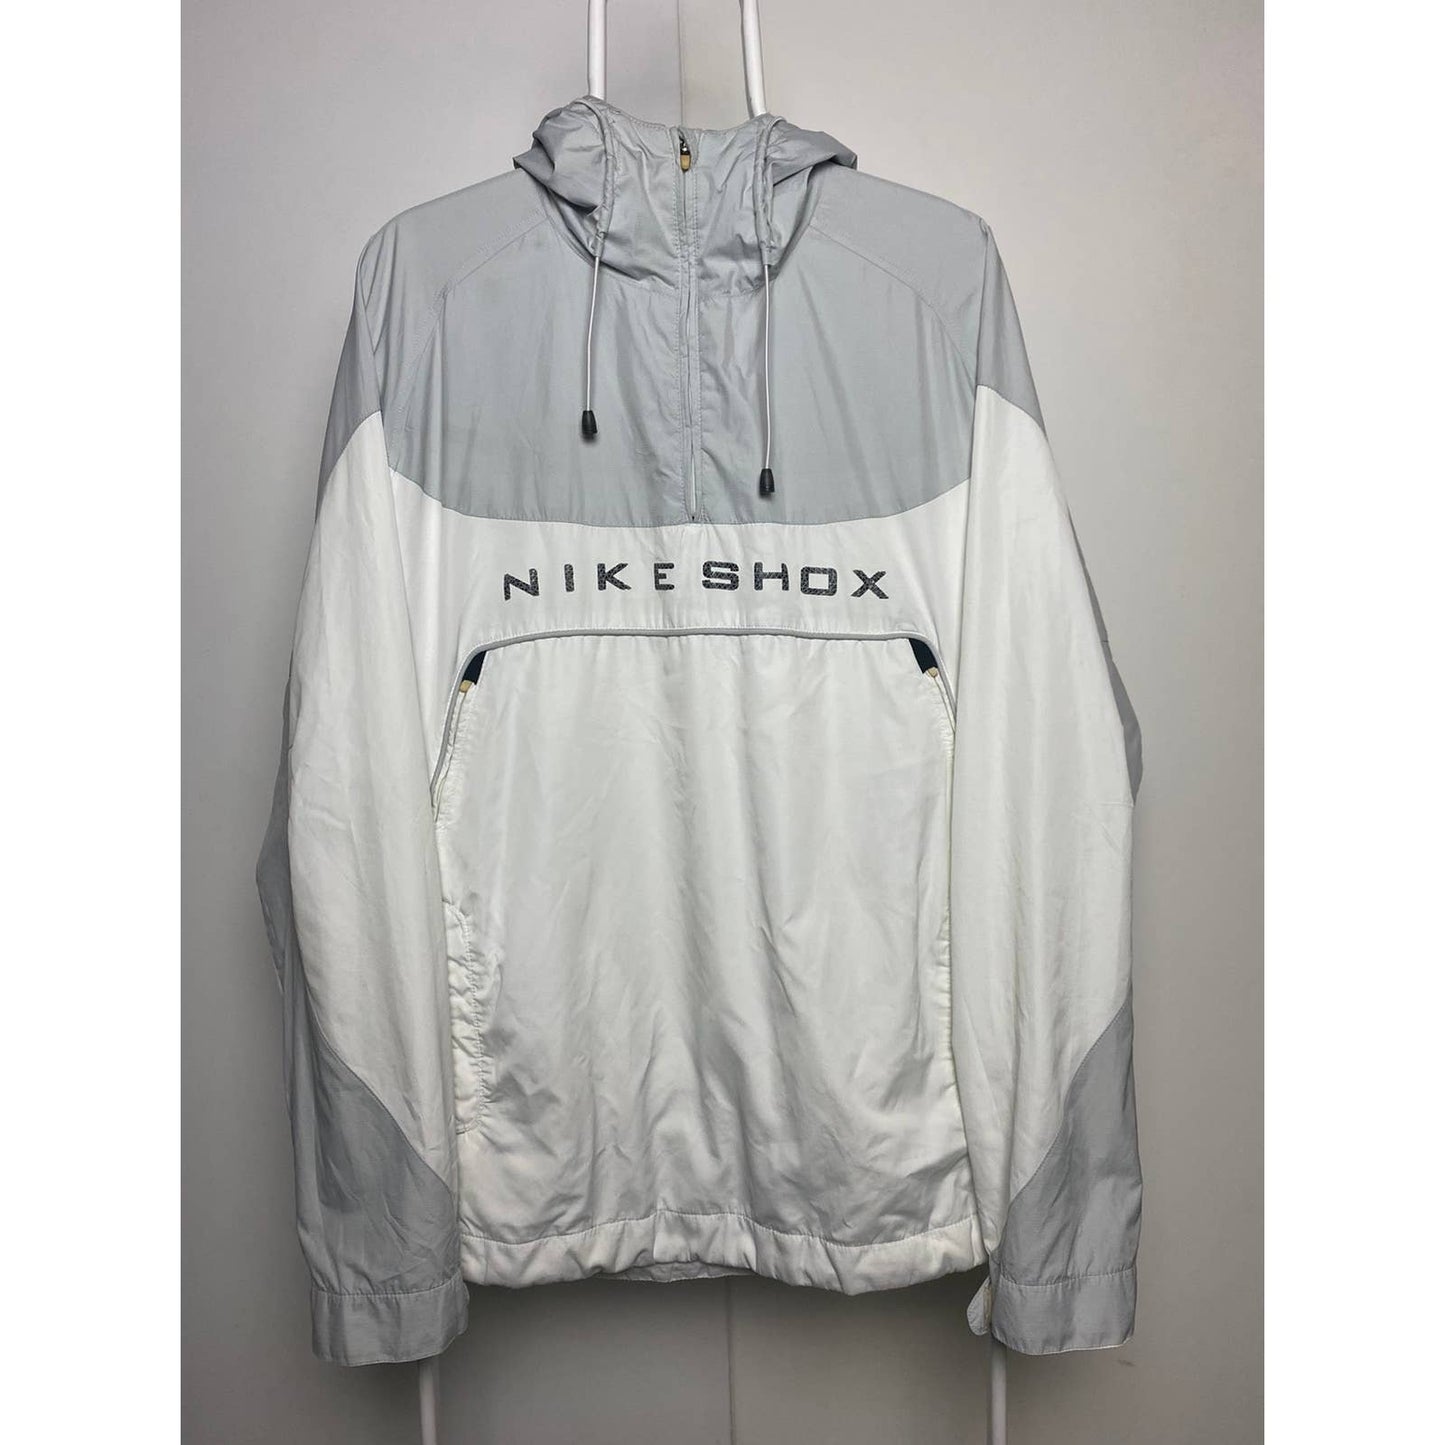 Nike Shox vintage Jacket Pullover Anorak big logo 2000s